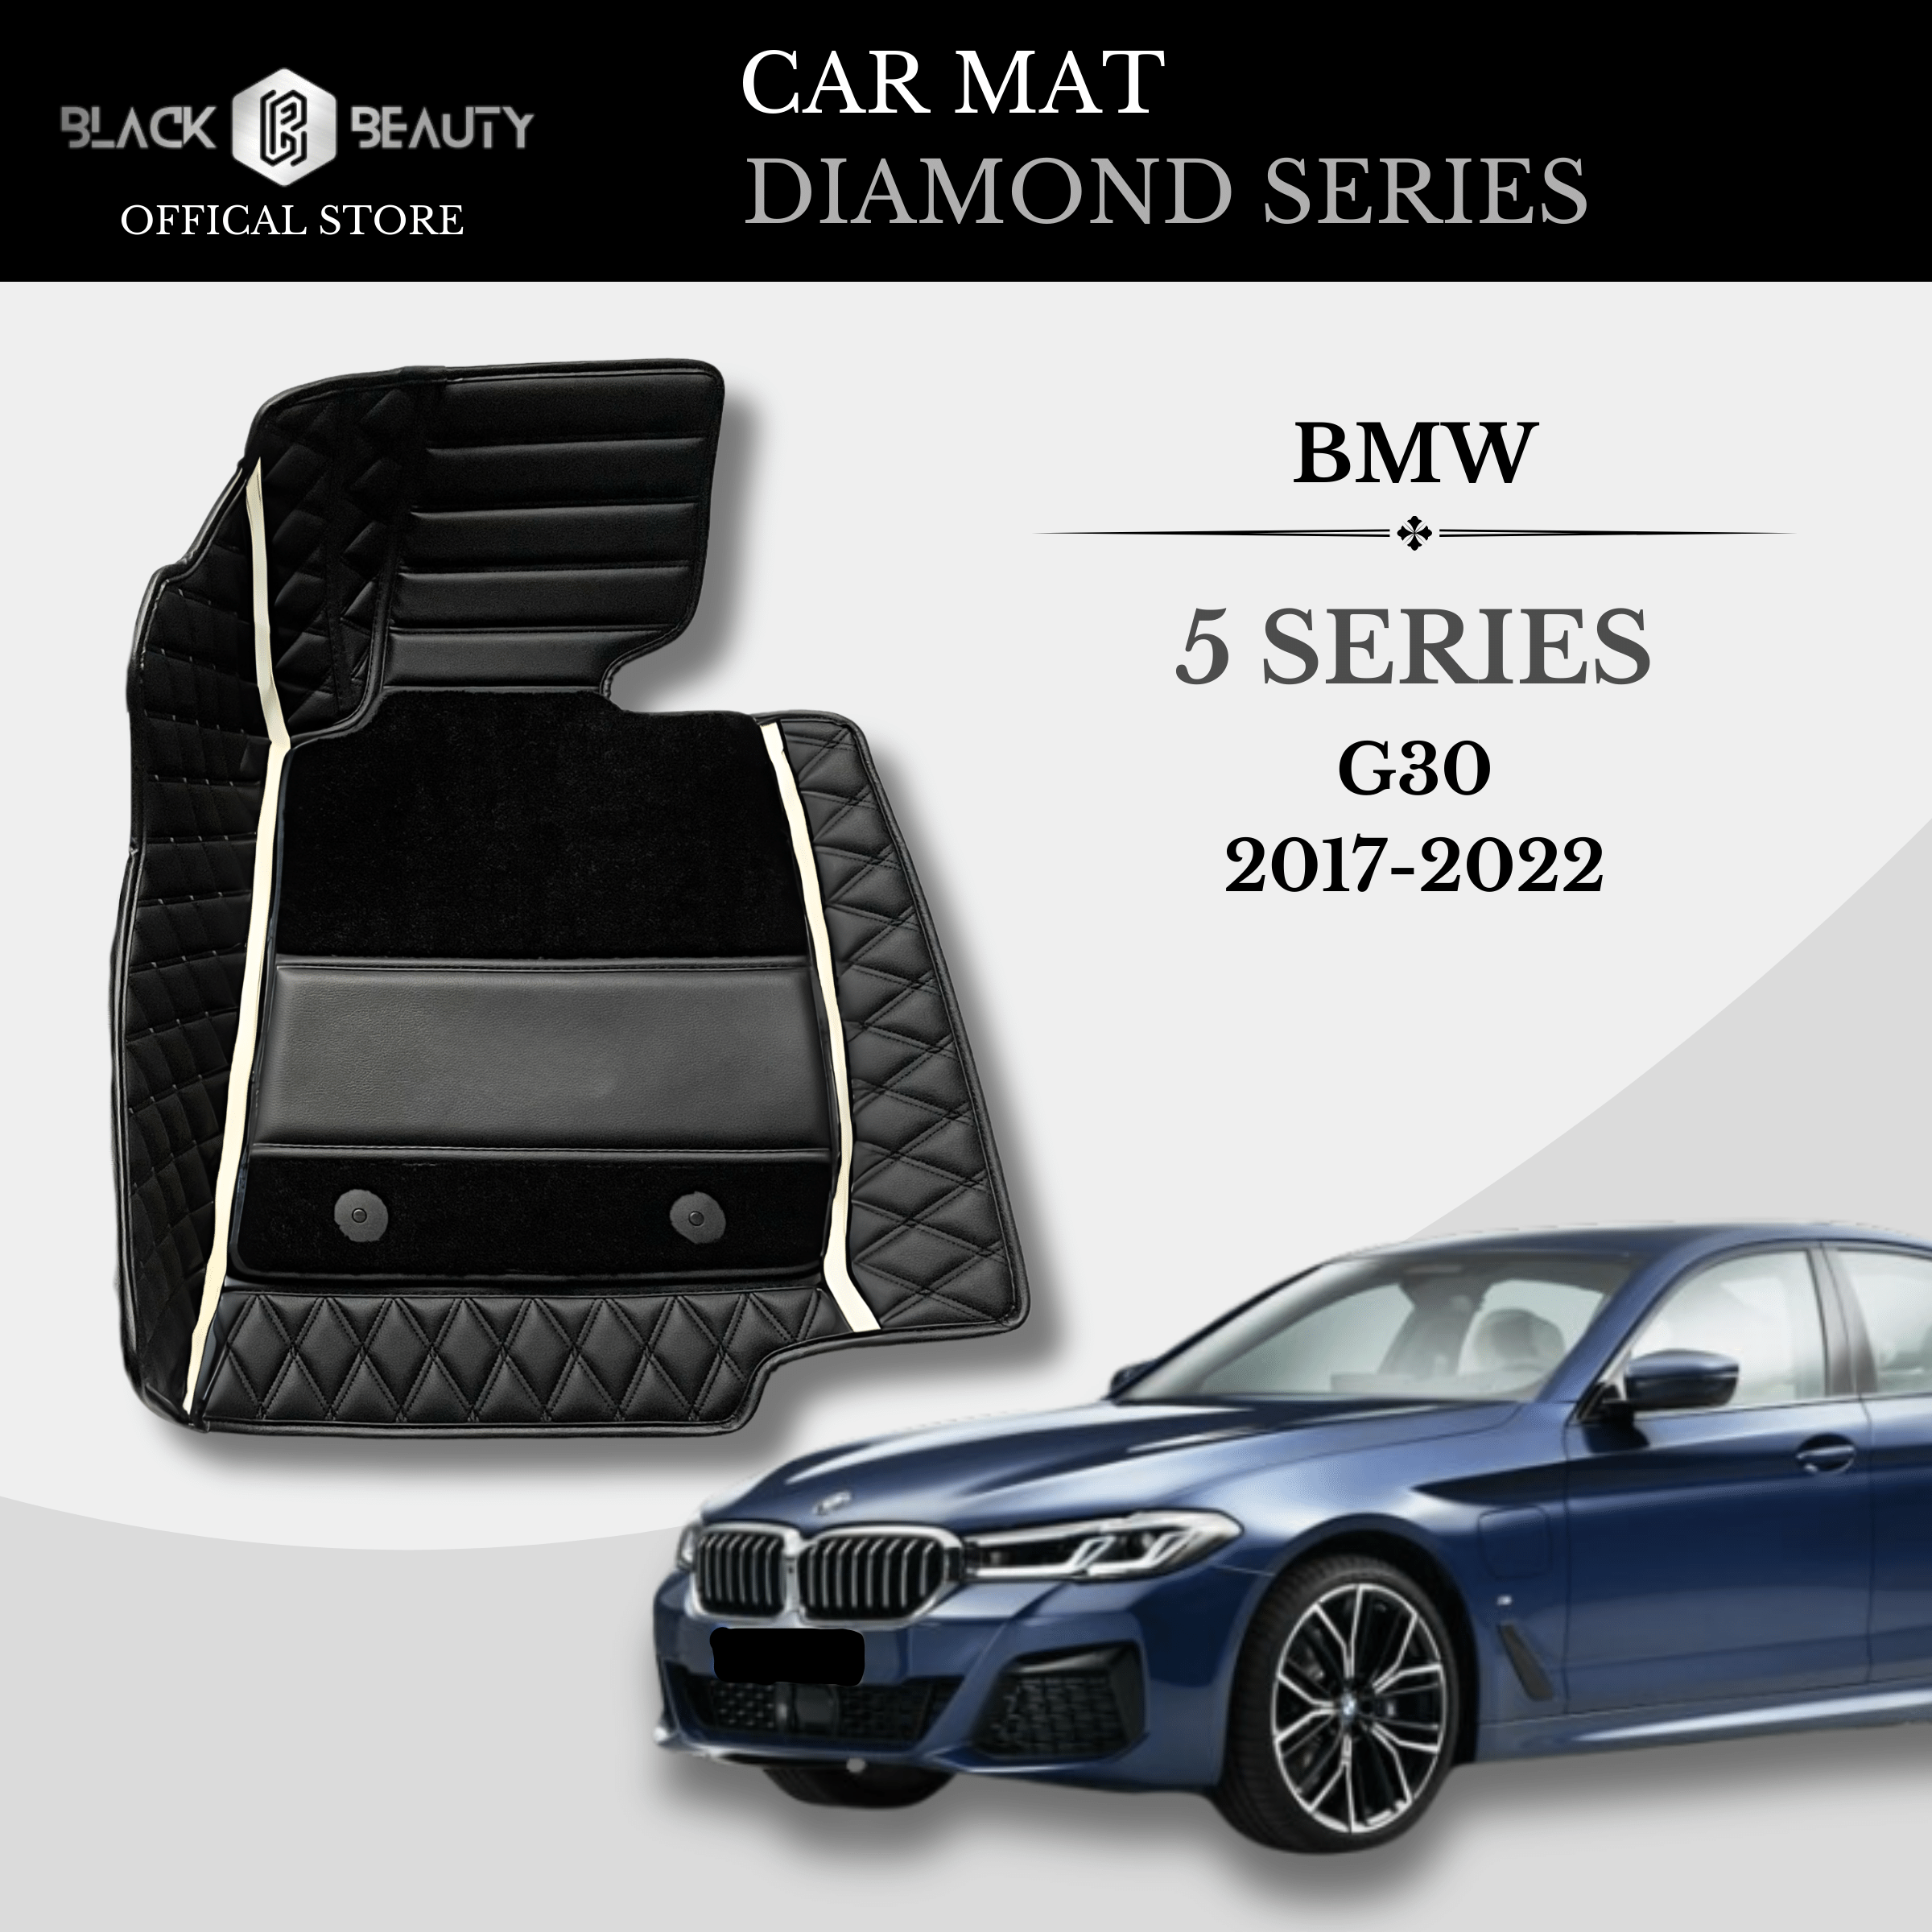 BMW 5 Series G30 (2017-2022) - Diamond Series Car Mat